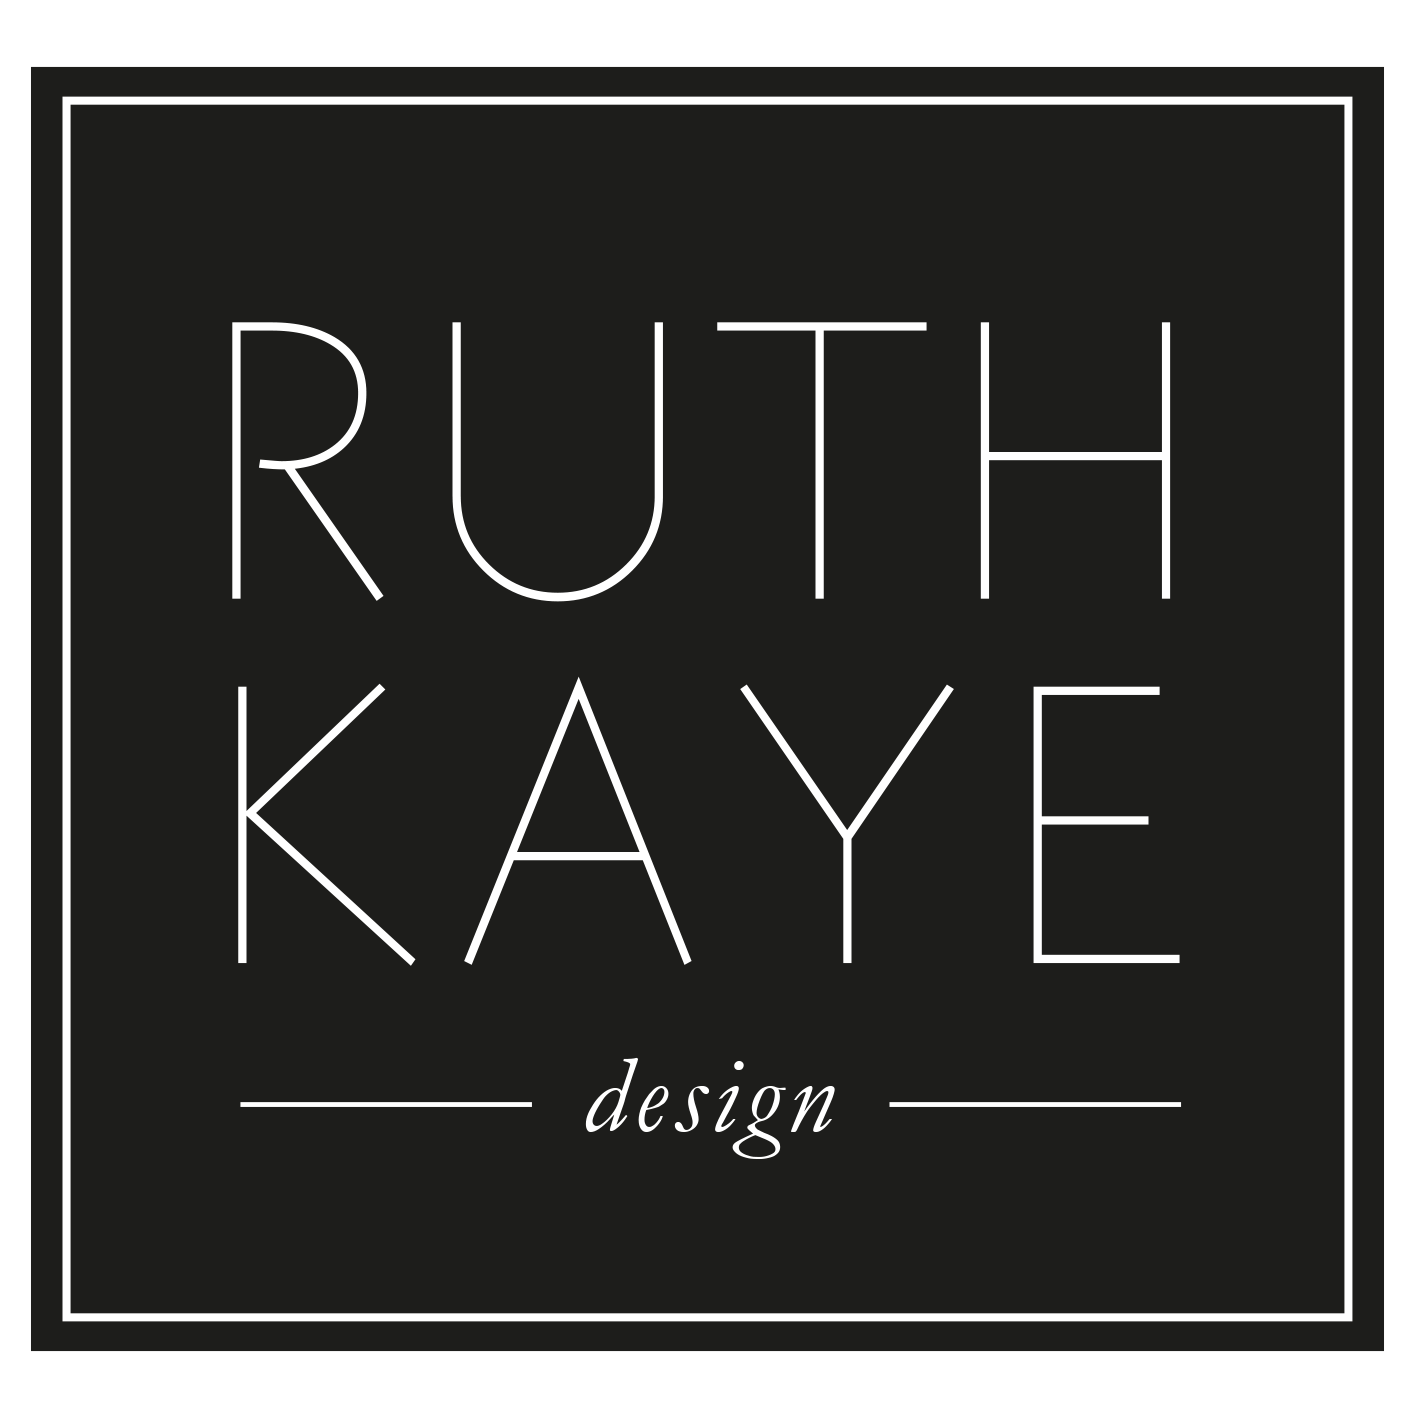 RUTH KAYE DESIGN